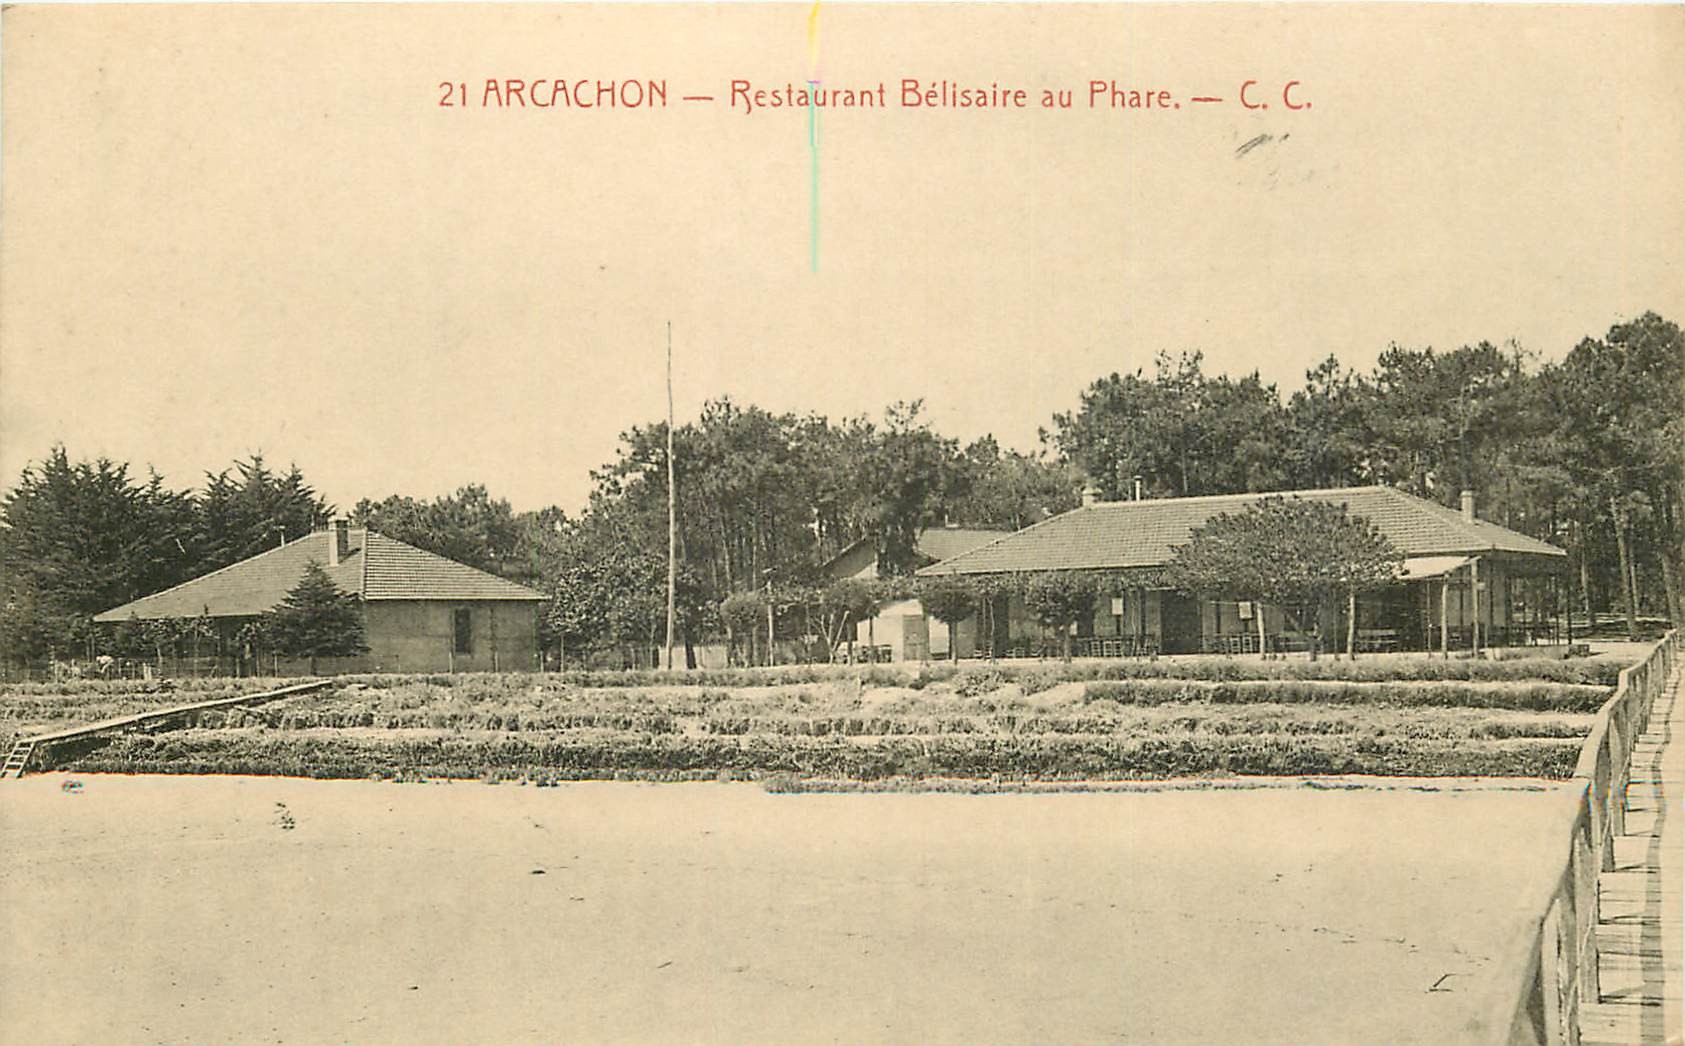 33 ARCACHON. Restaurant Belisaire au Phare